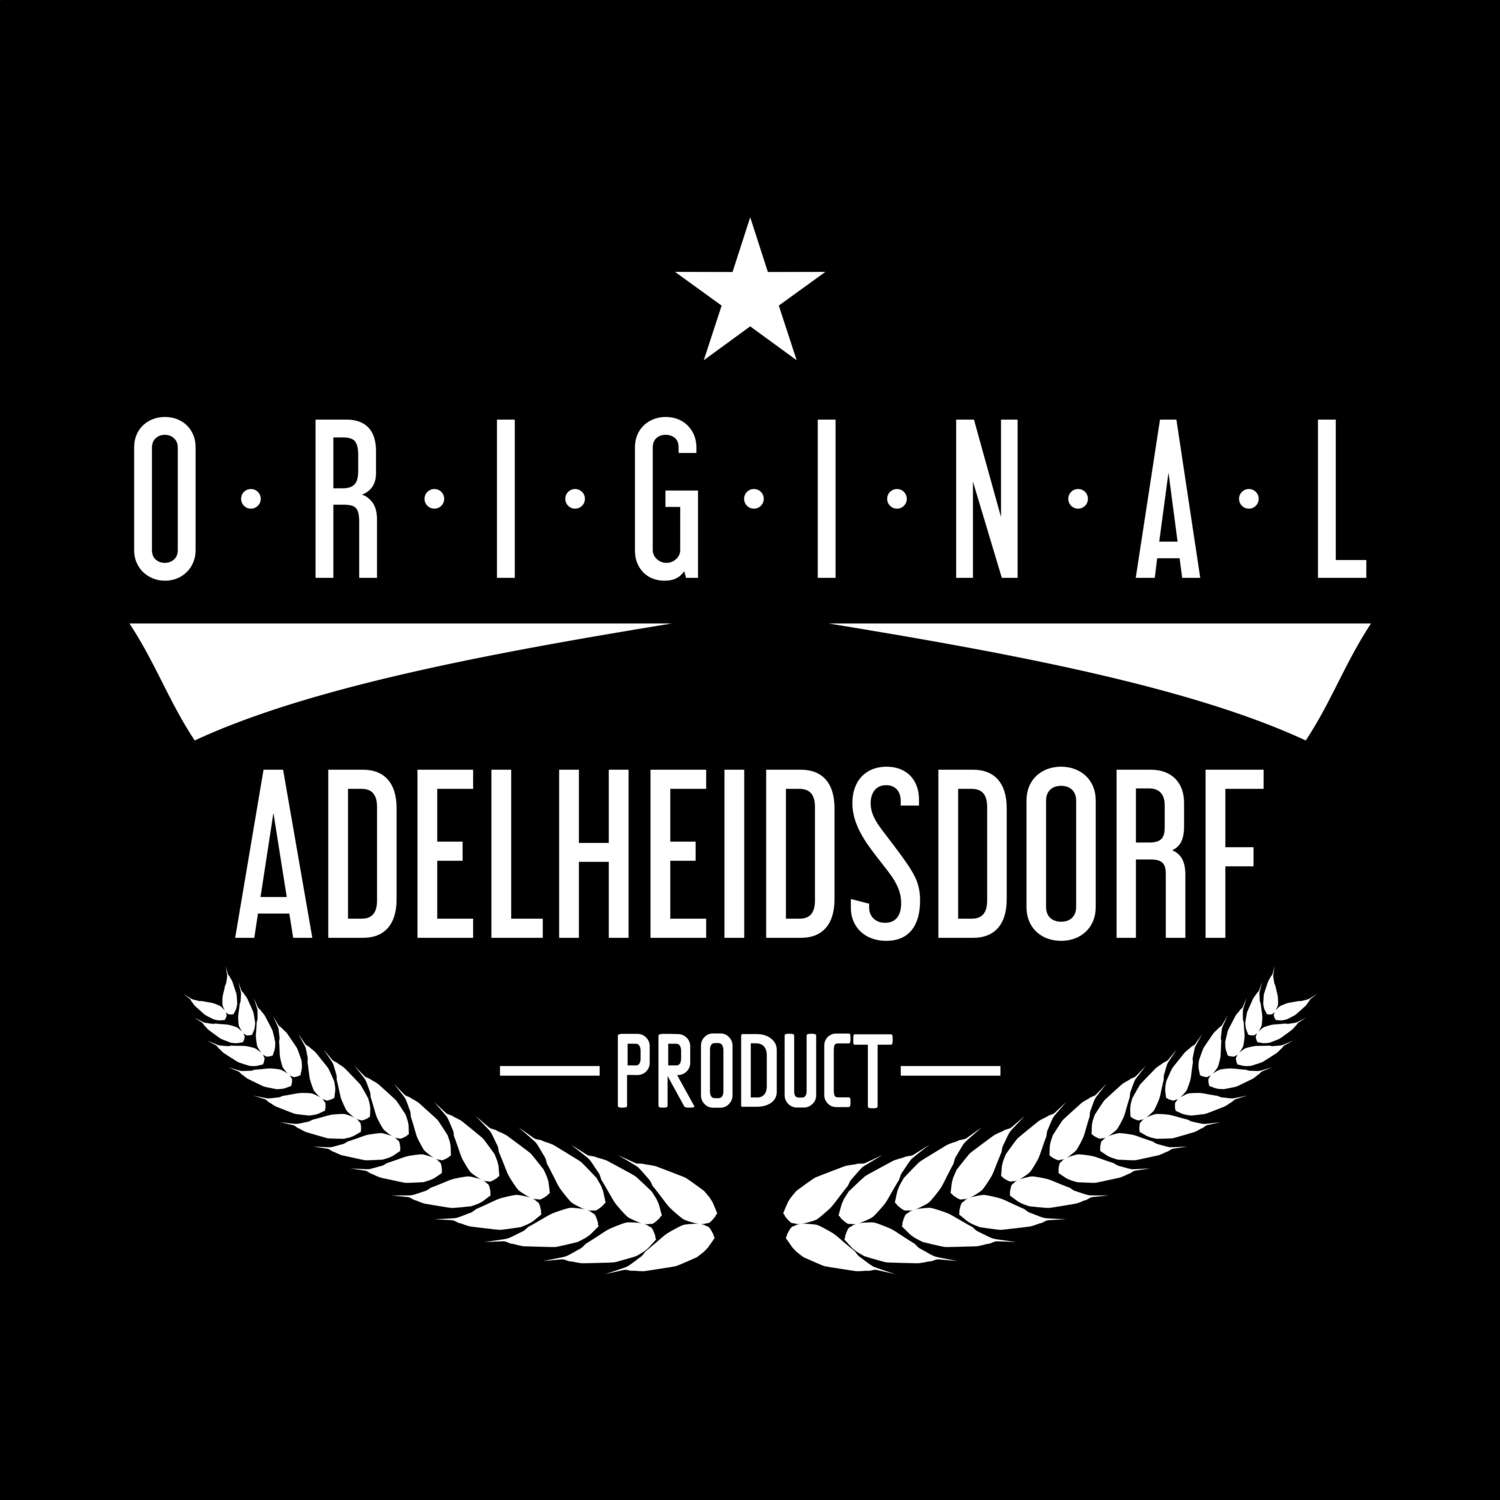 Adelheidsdorf T-Shirt »Original Product«